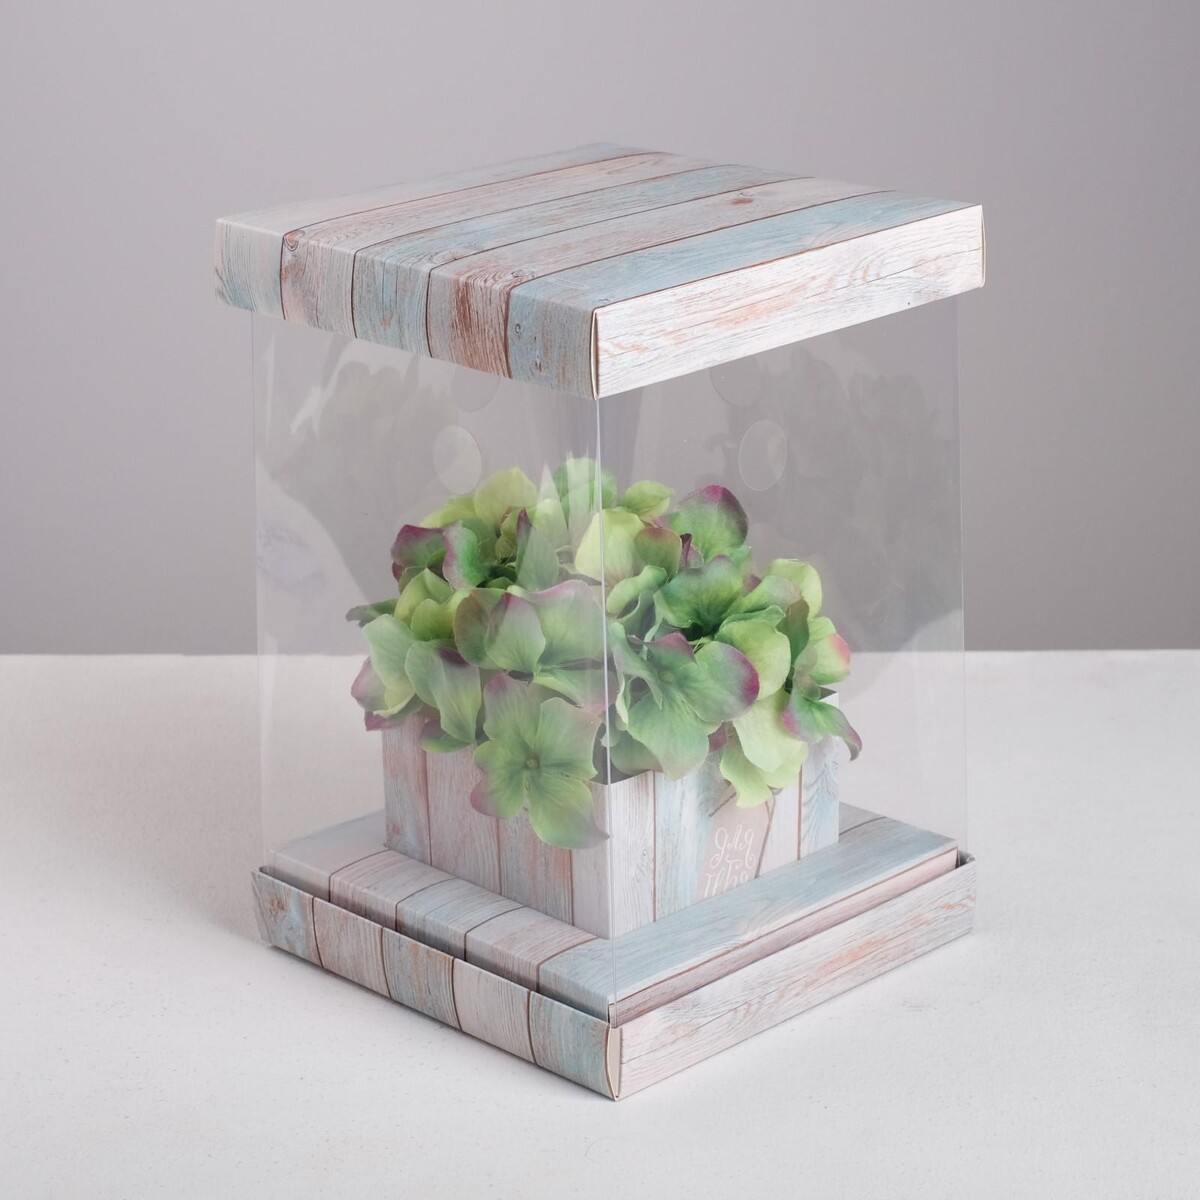 Коробка подарочная для цветов с вазой и pvc окнами складная, упаковка, коробка для ов с вазой и pvc окнами складная 23 х 30 х 23 см белый